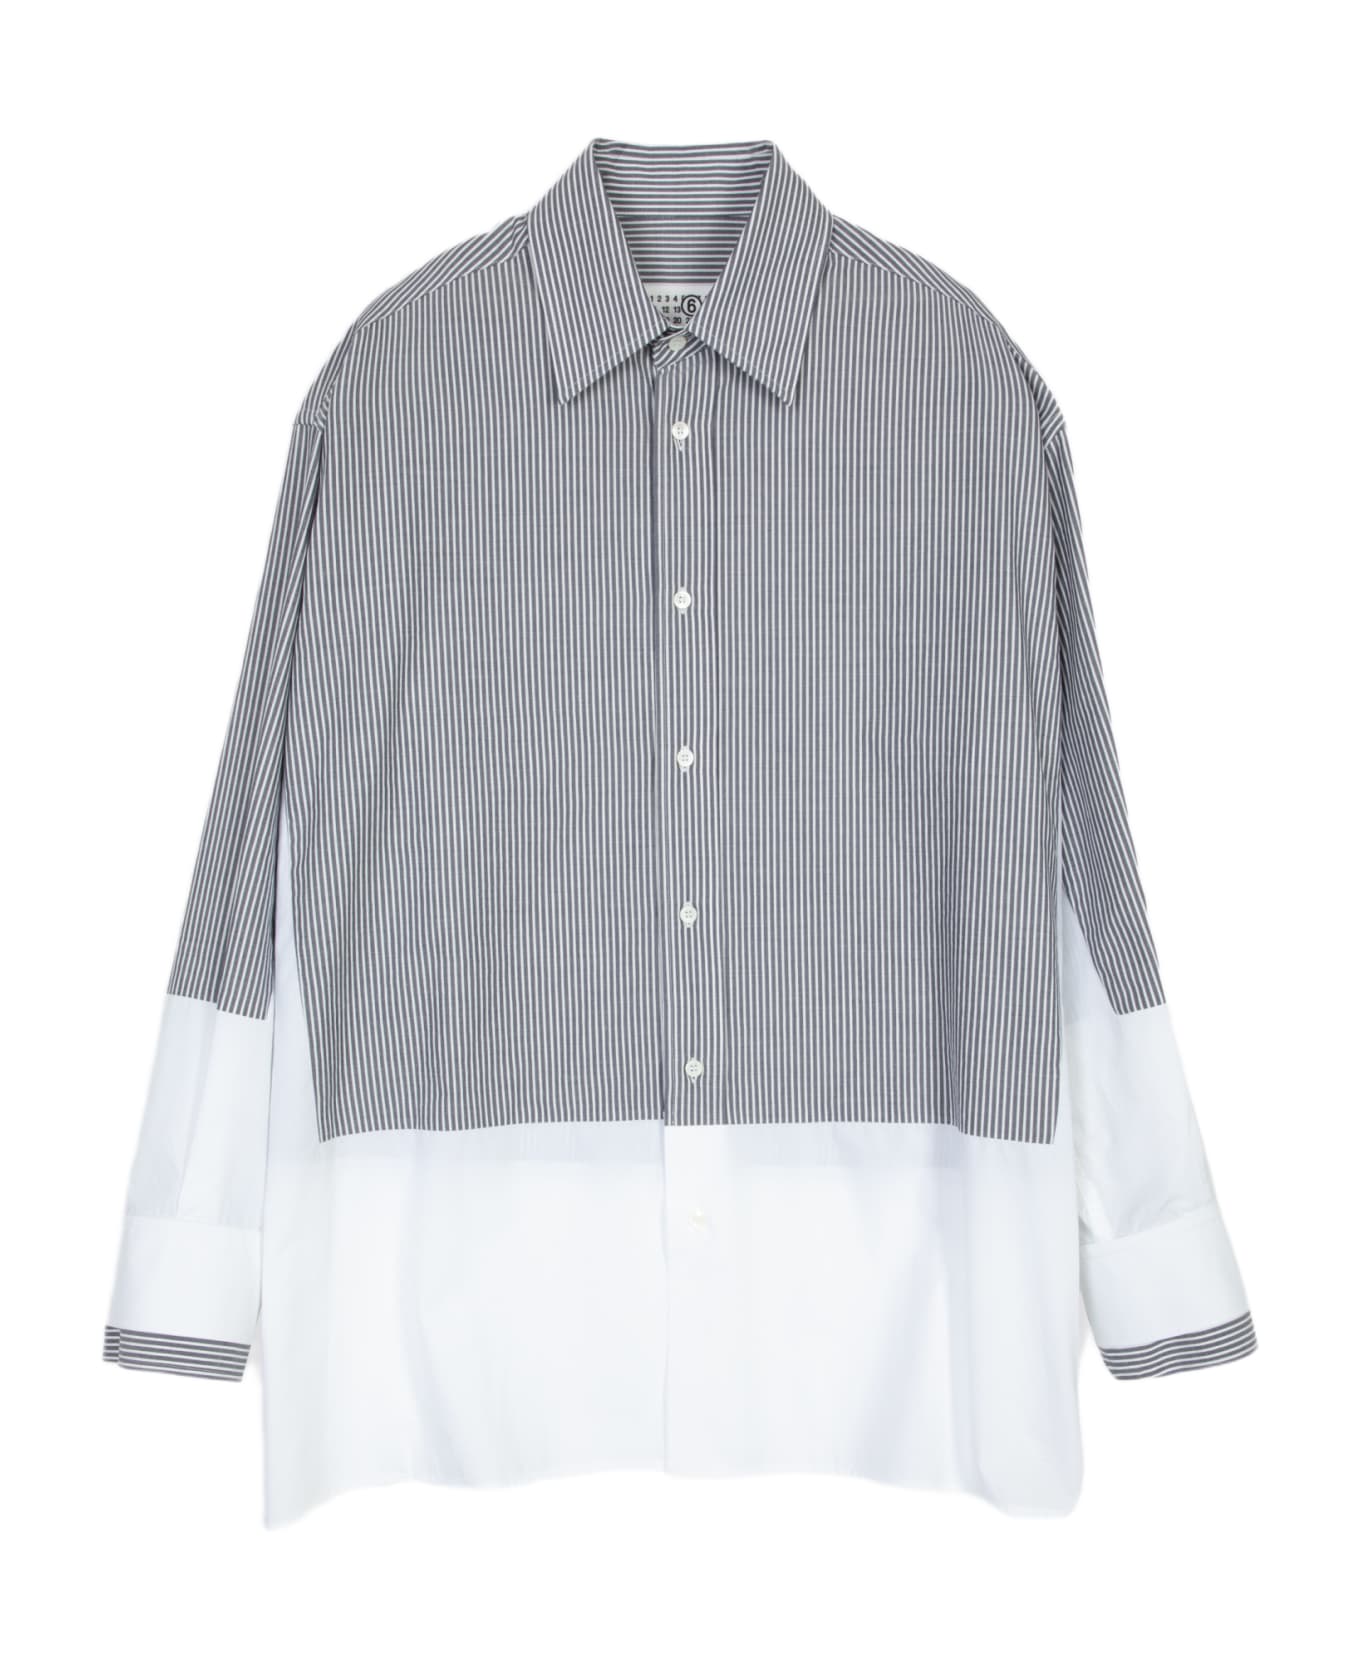 MM6 Maison Margiela Camicia A Maniche Lunghe Cotton Shirt - Bianco/grigio